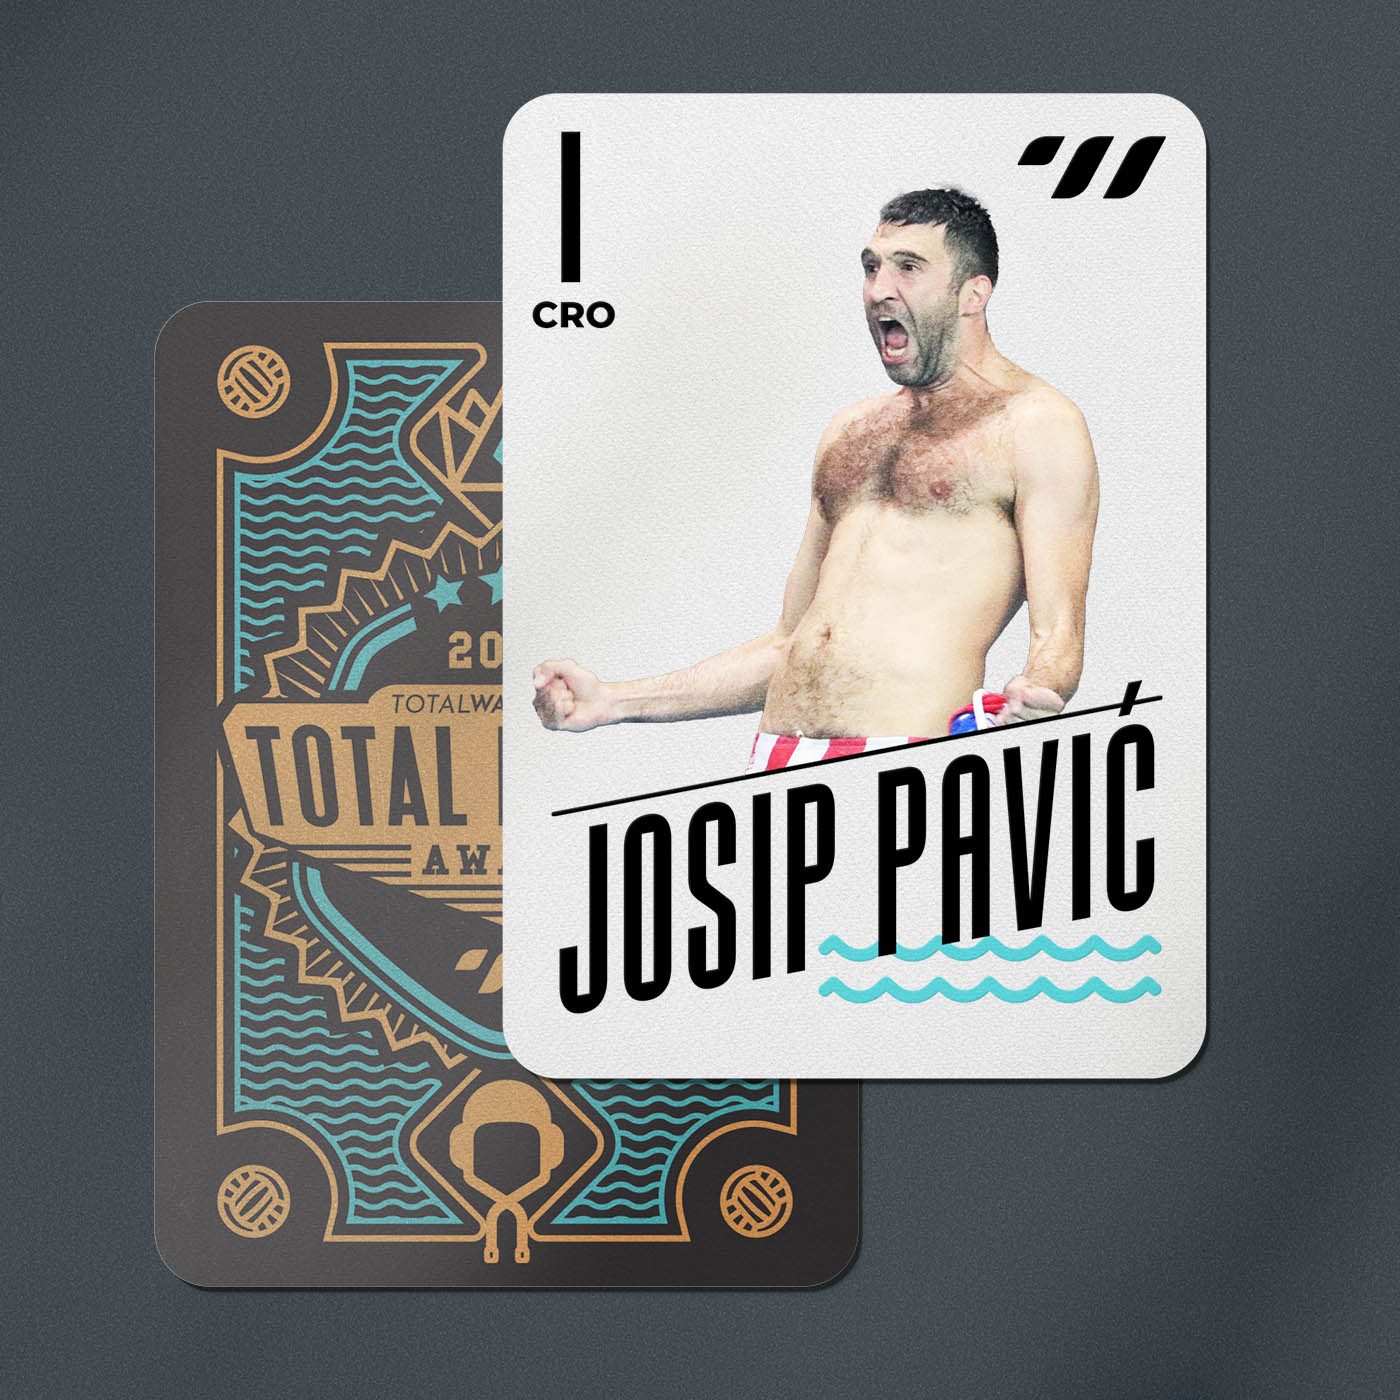 GOALKEEPER - Josip Pavic (CRO) | Capt.